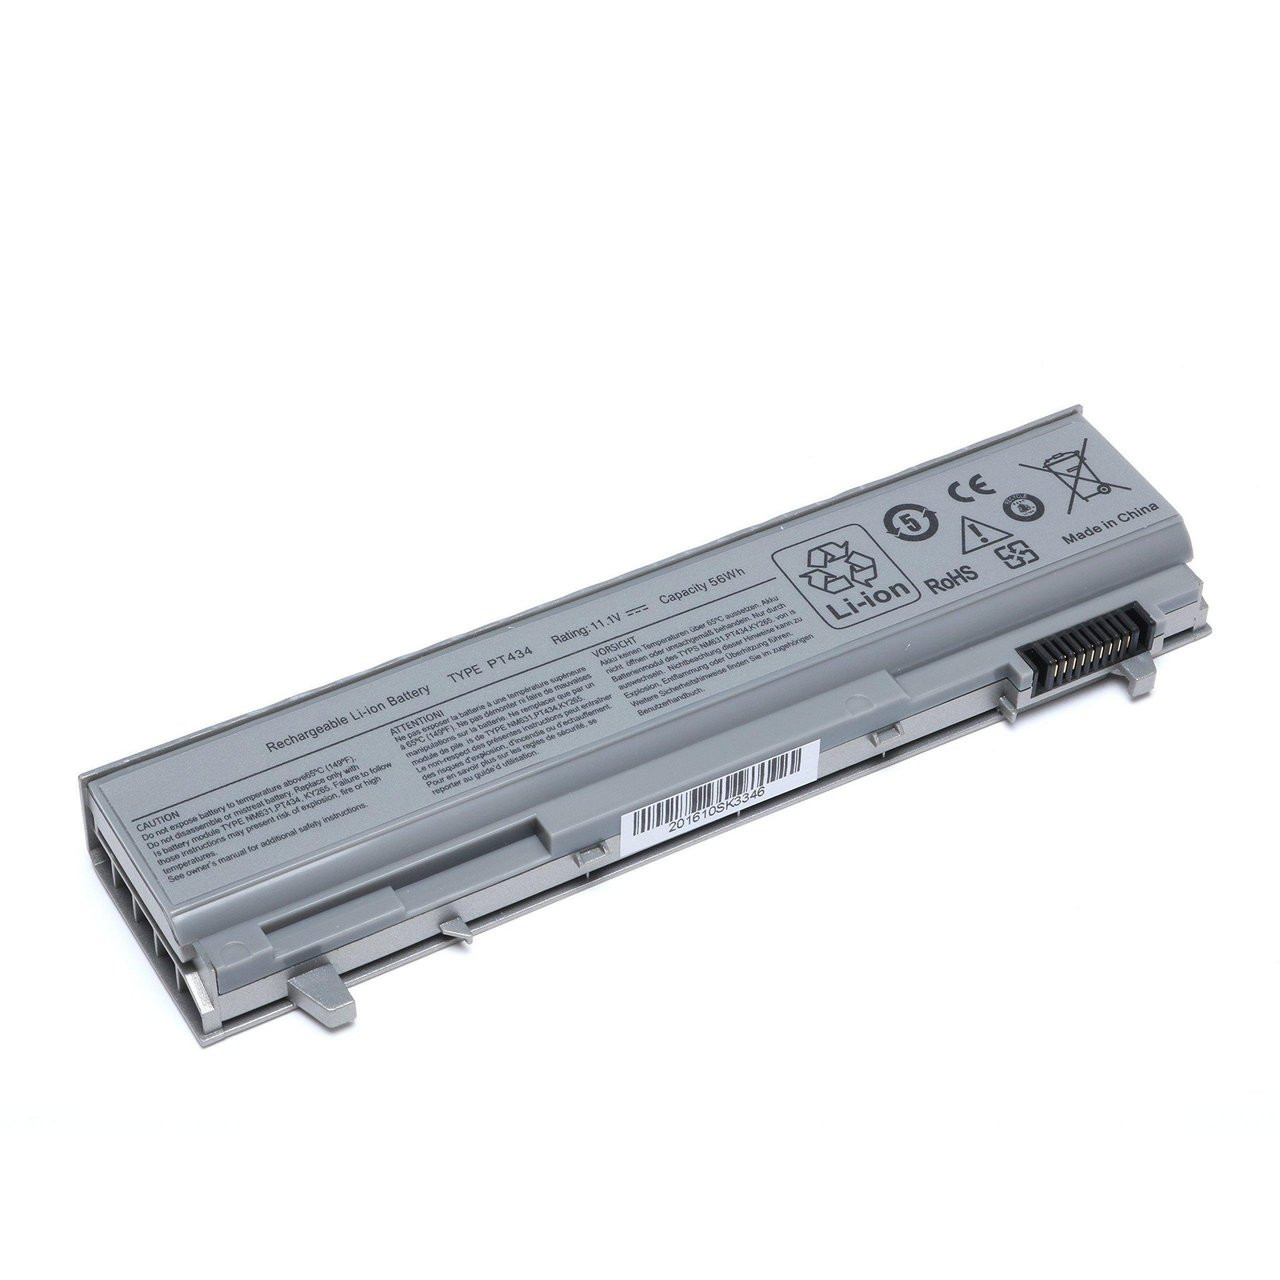 Conform kijken Teken Dell Latitude Battery PT434 E6400 E6410 E6500 E6510 - DISCOUNT ELECTRONICS